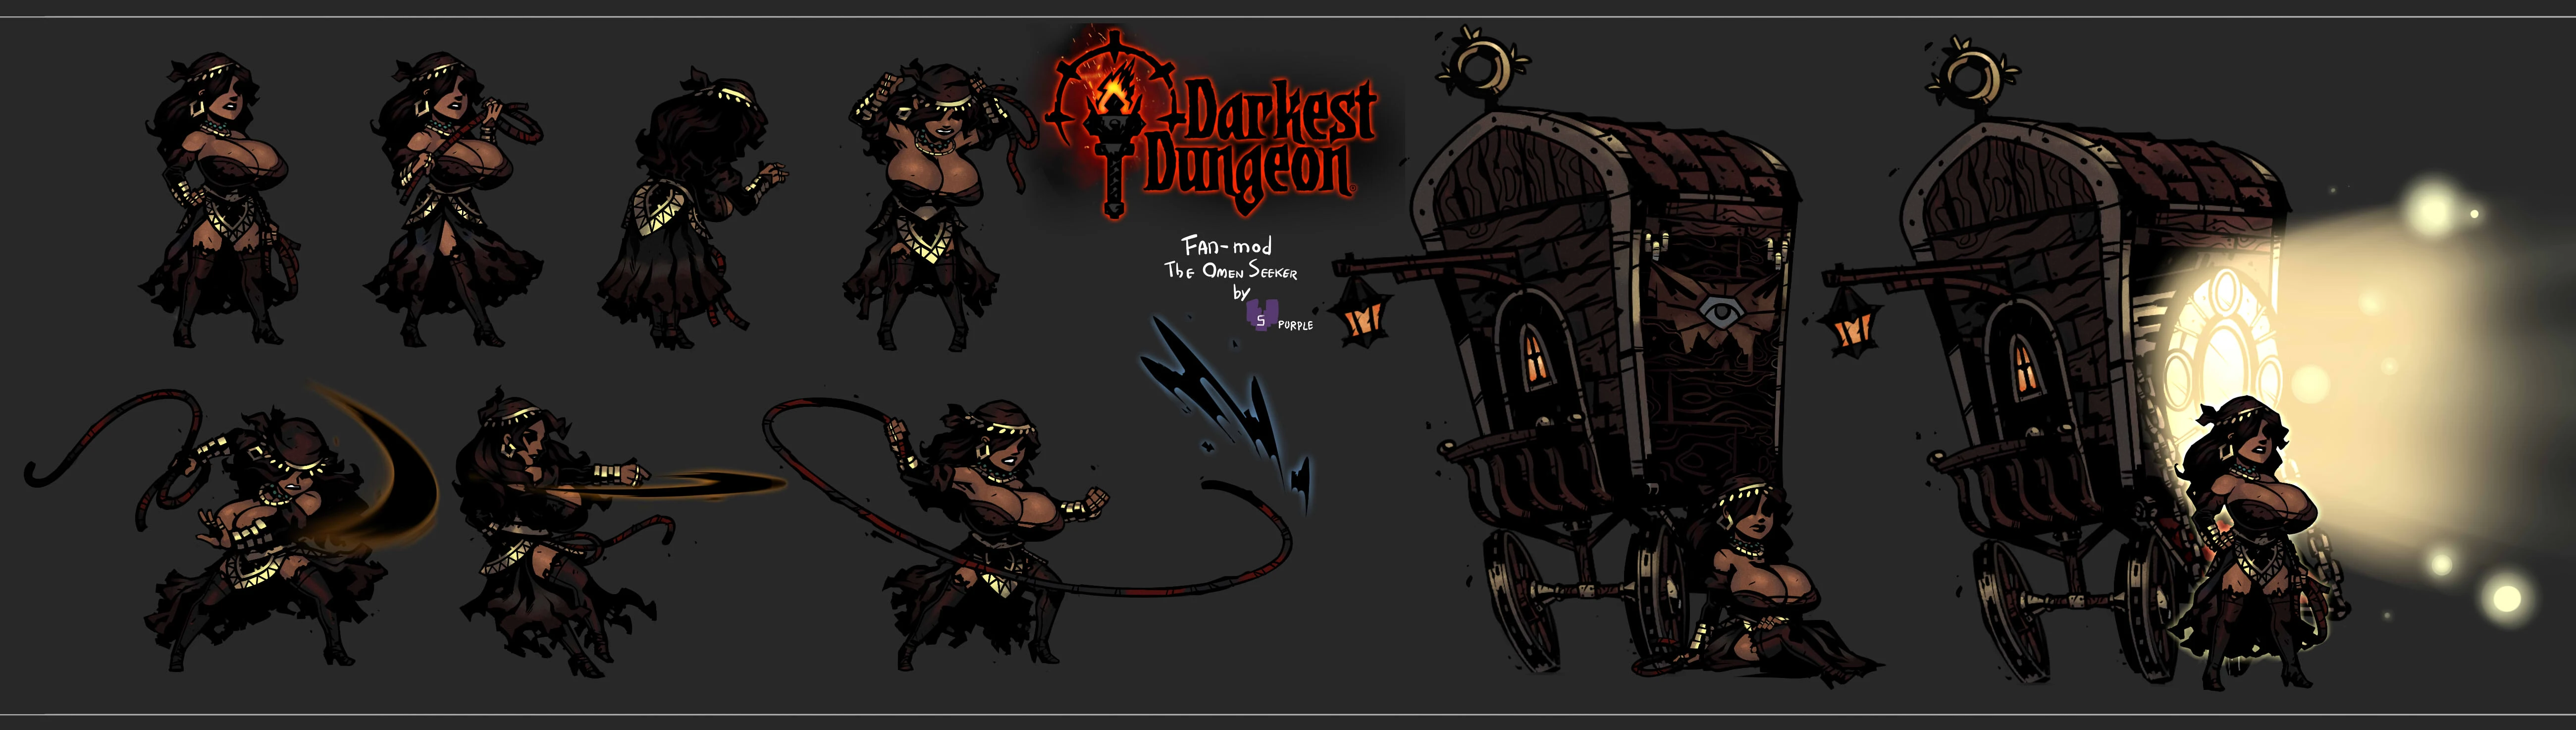 darkest dungeons mod classes